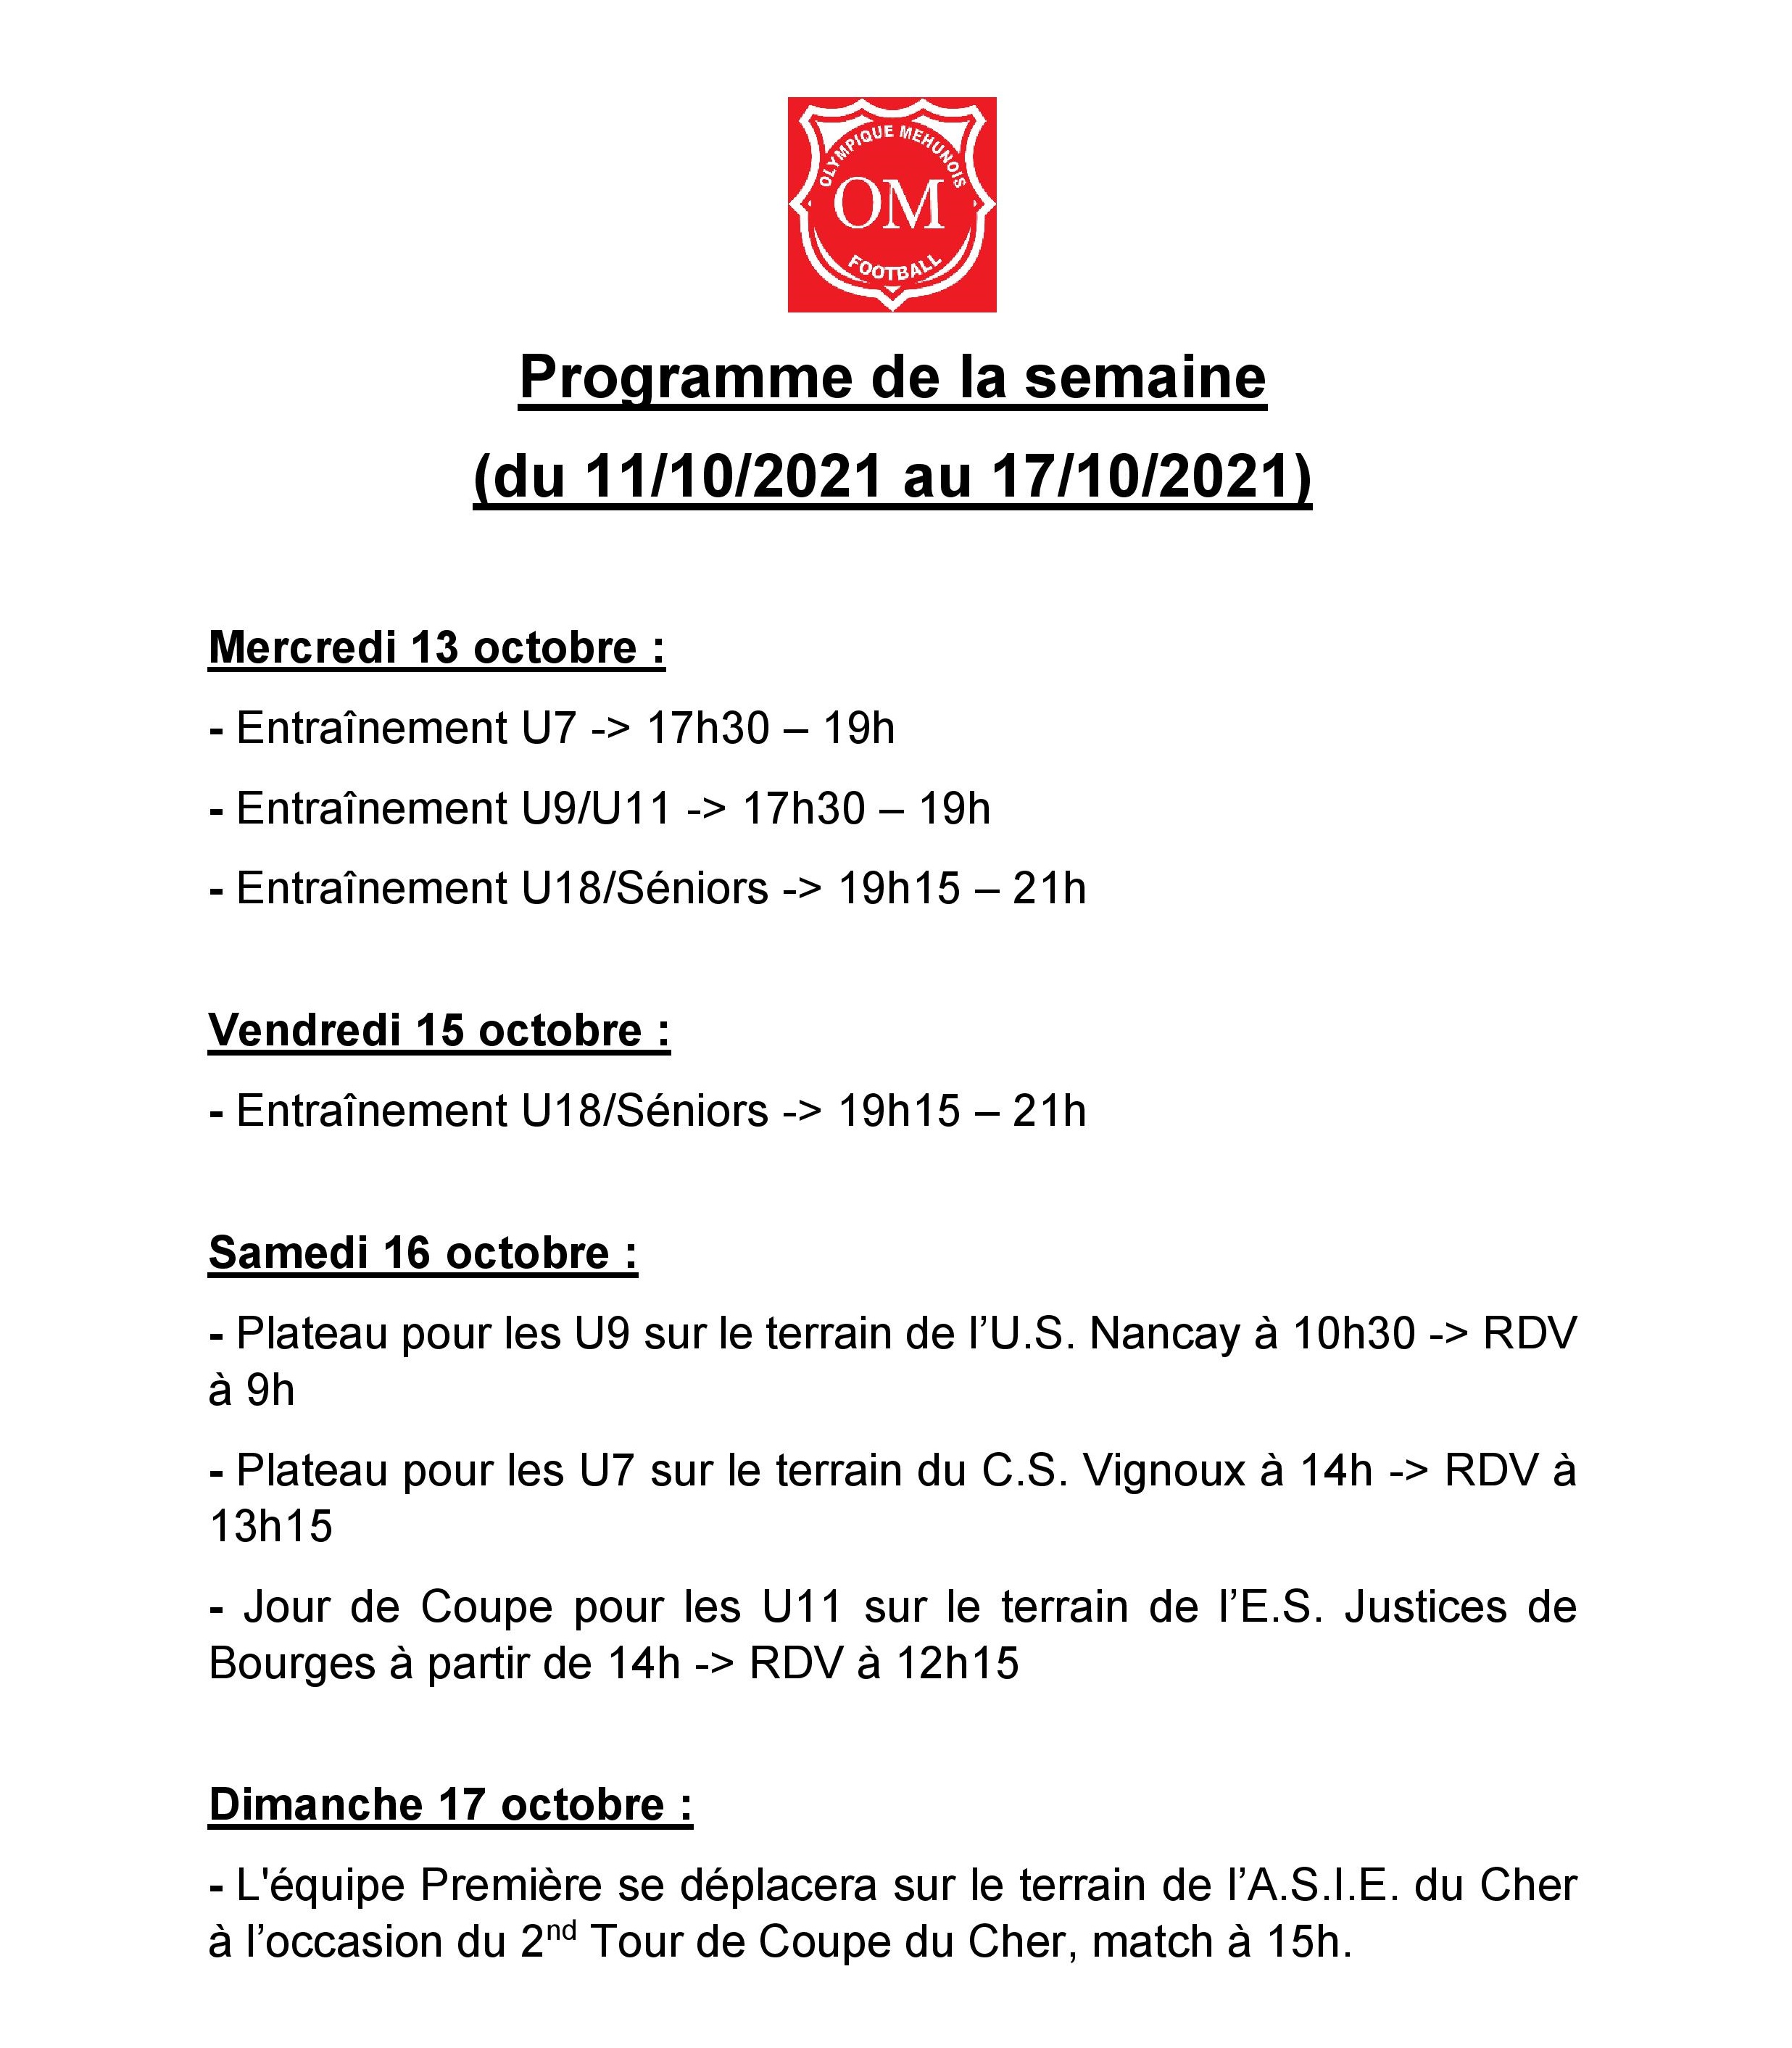 Programme_de_la_semaine_11-10-2021_17-10-2021.jpg